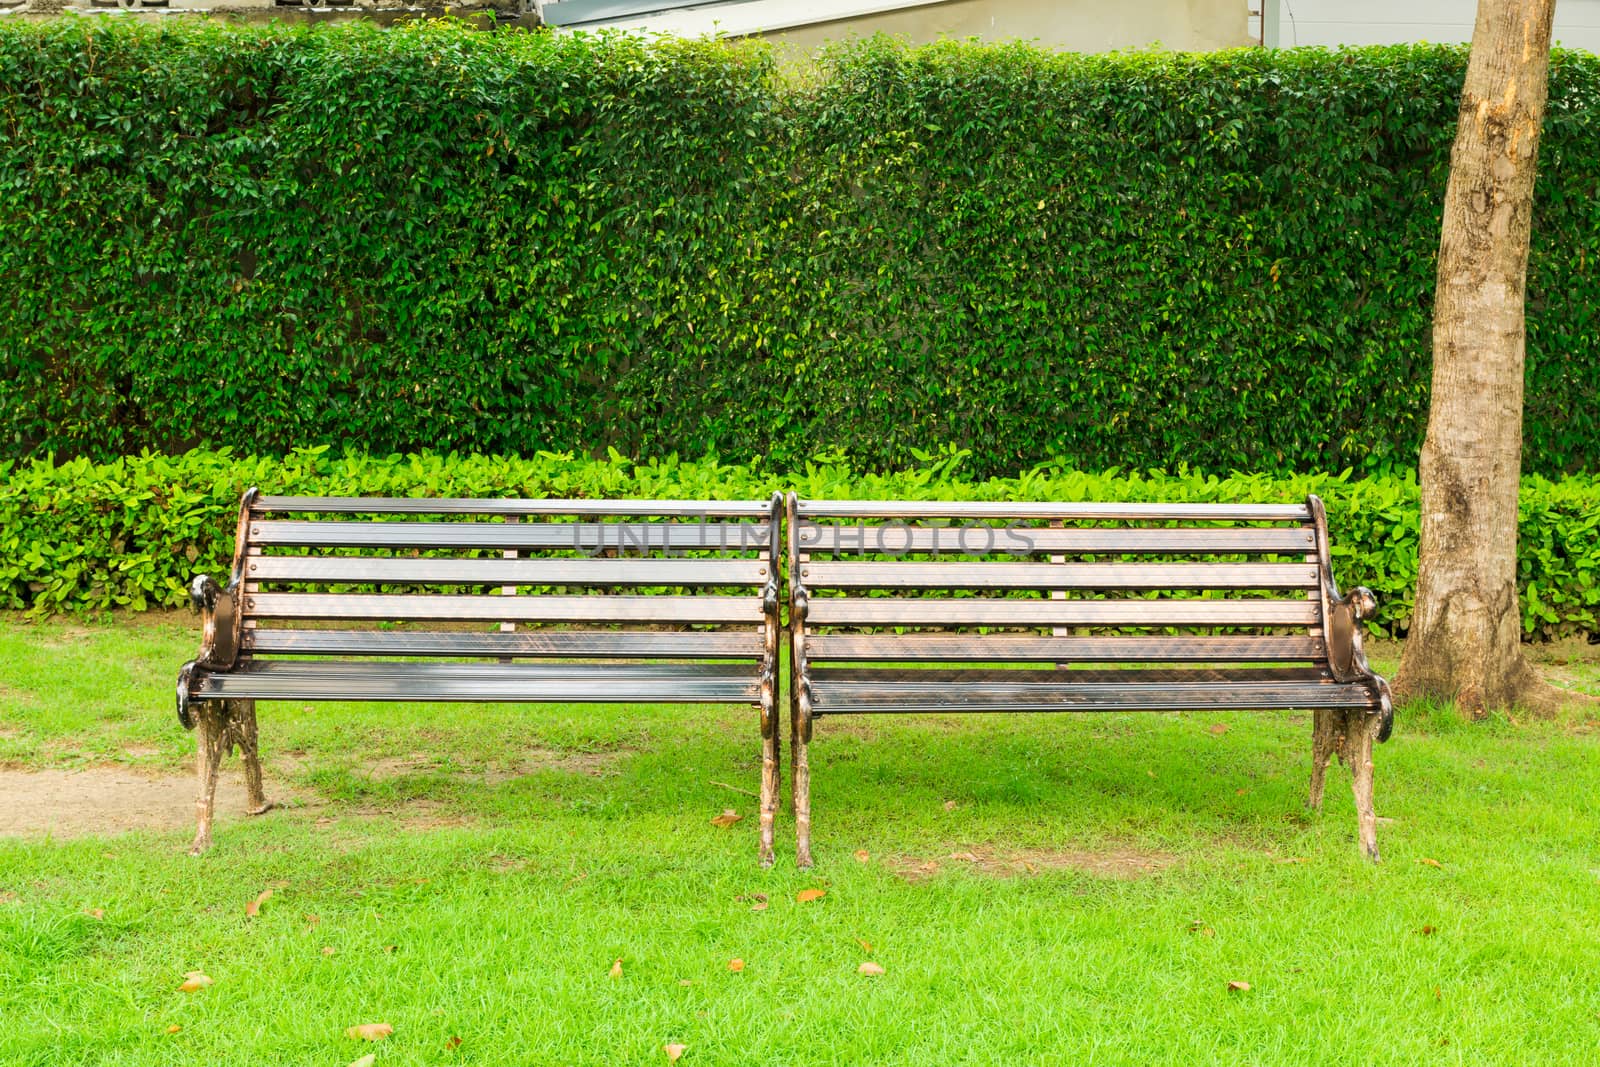 Stylish bench in summer park